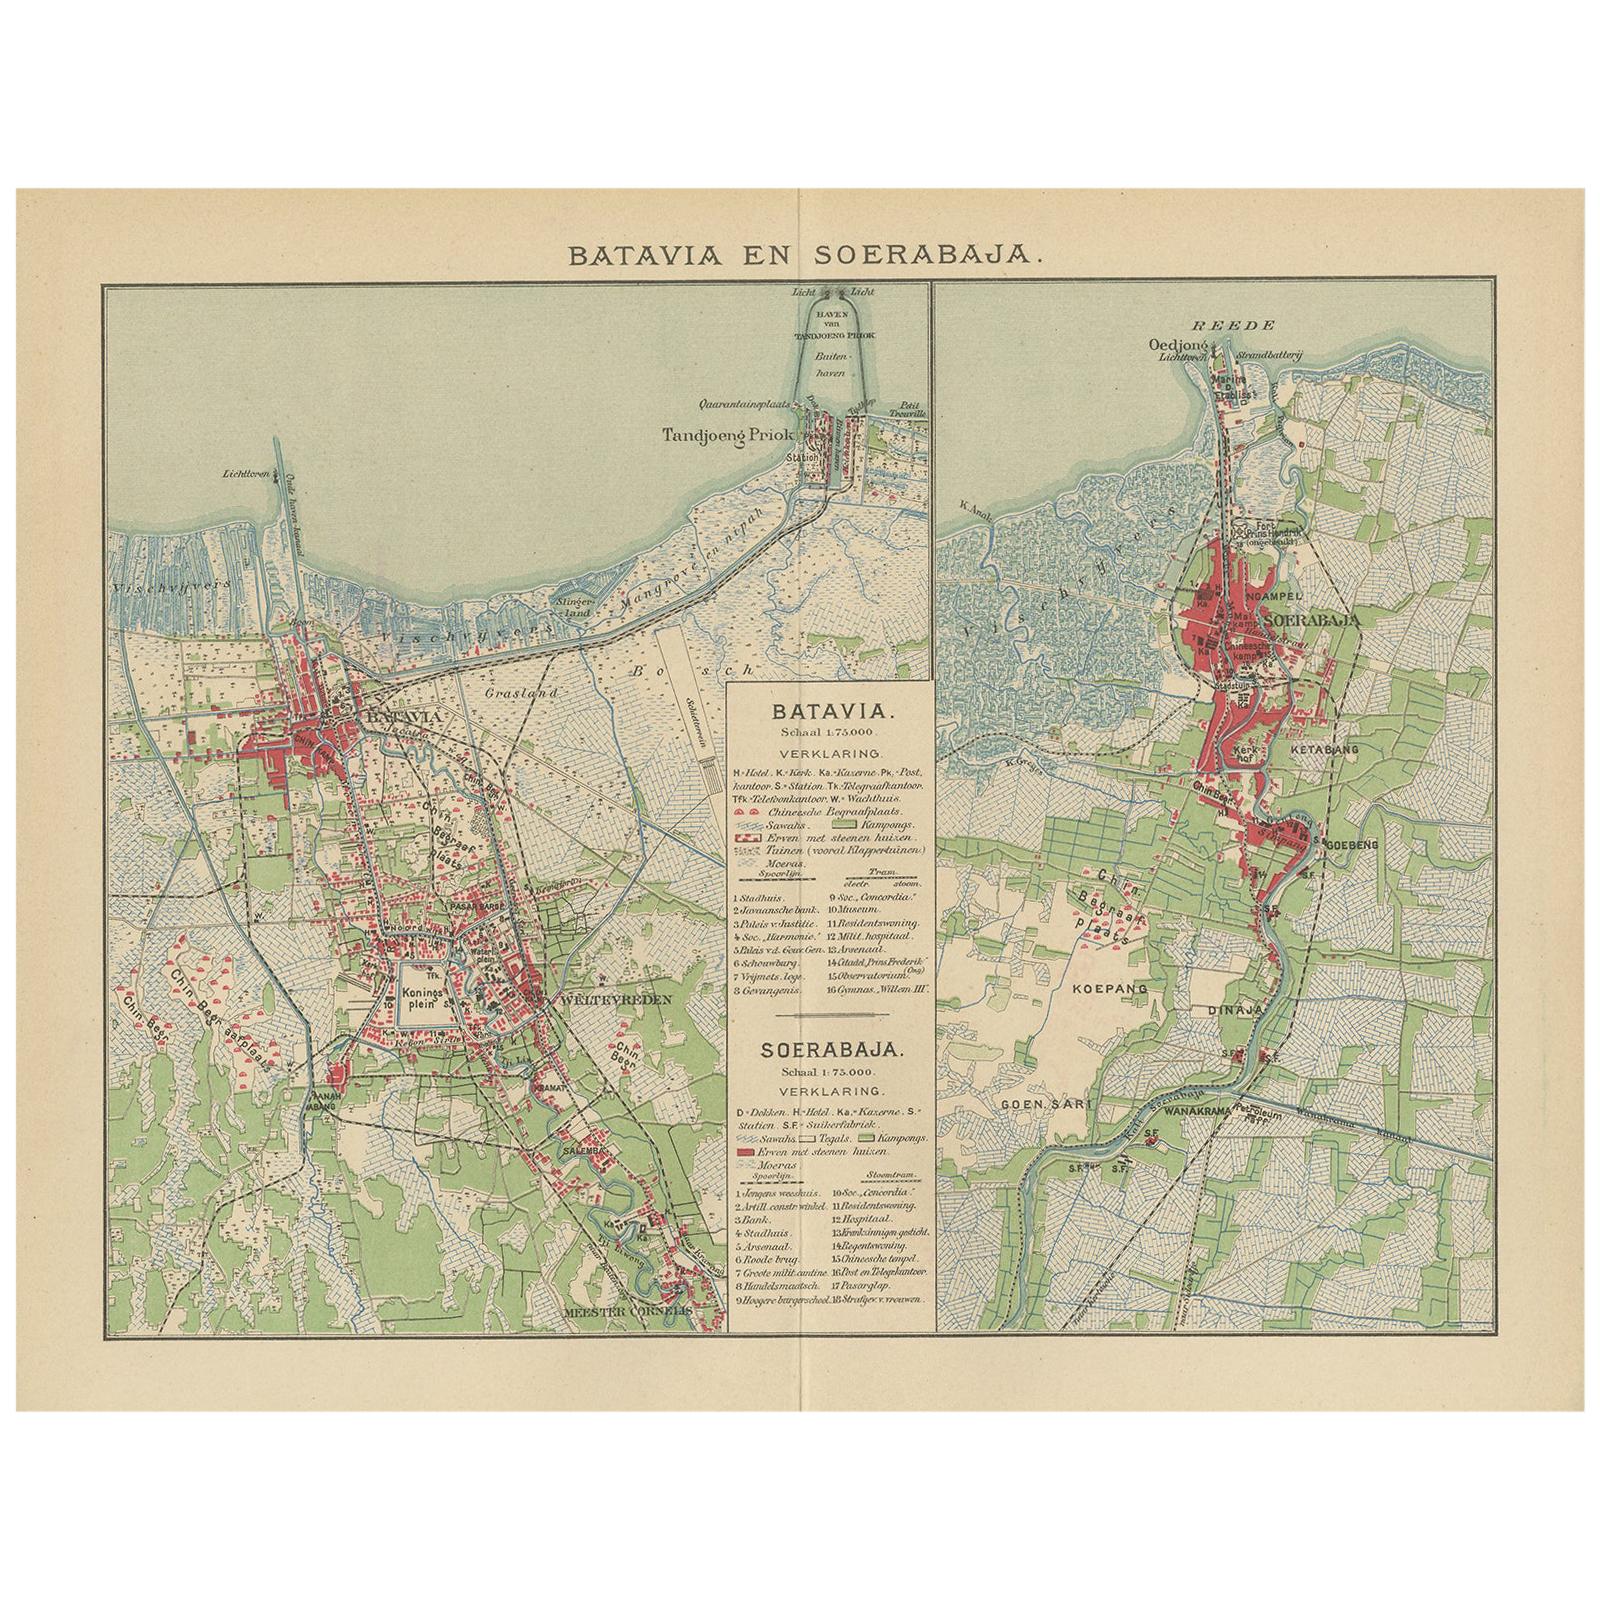 Antique Map of Batavia and Surabaya by Winkler Prins, 1905